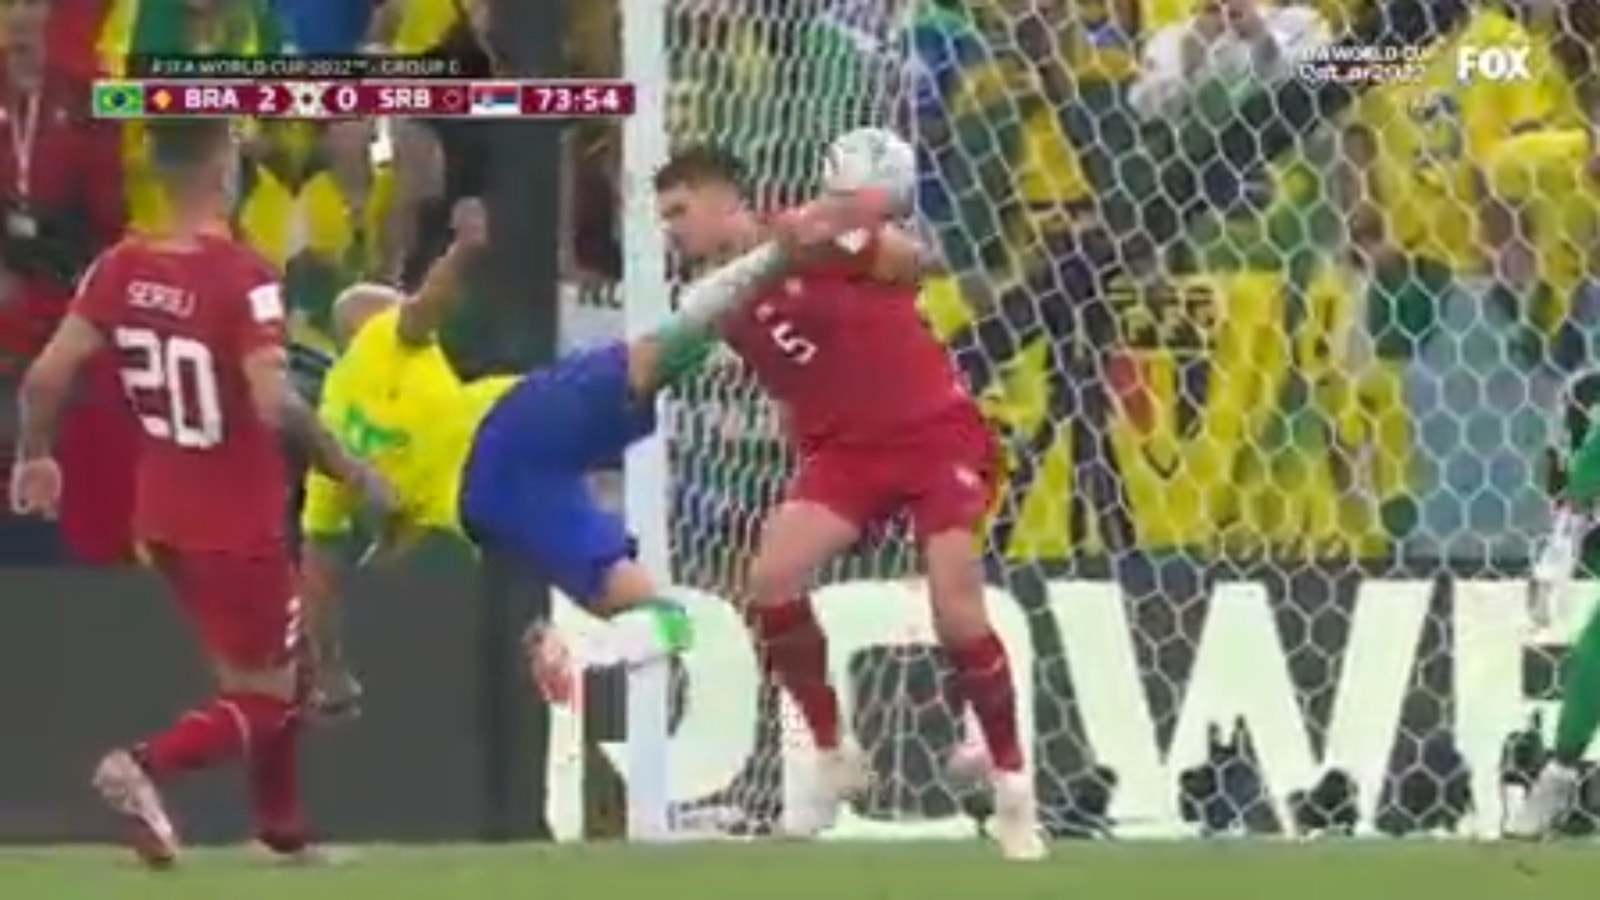 Richarlison puts Brazil ahead 2-0 with an acrobatic goal